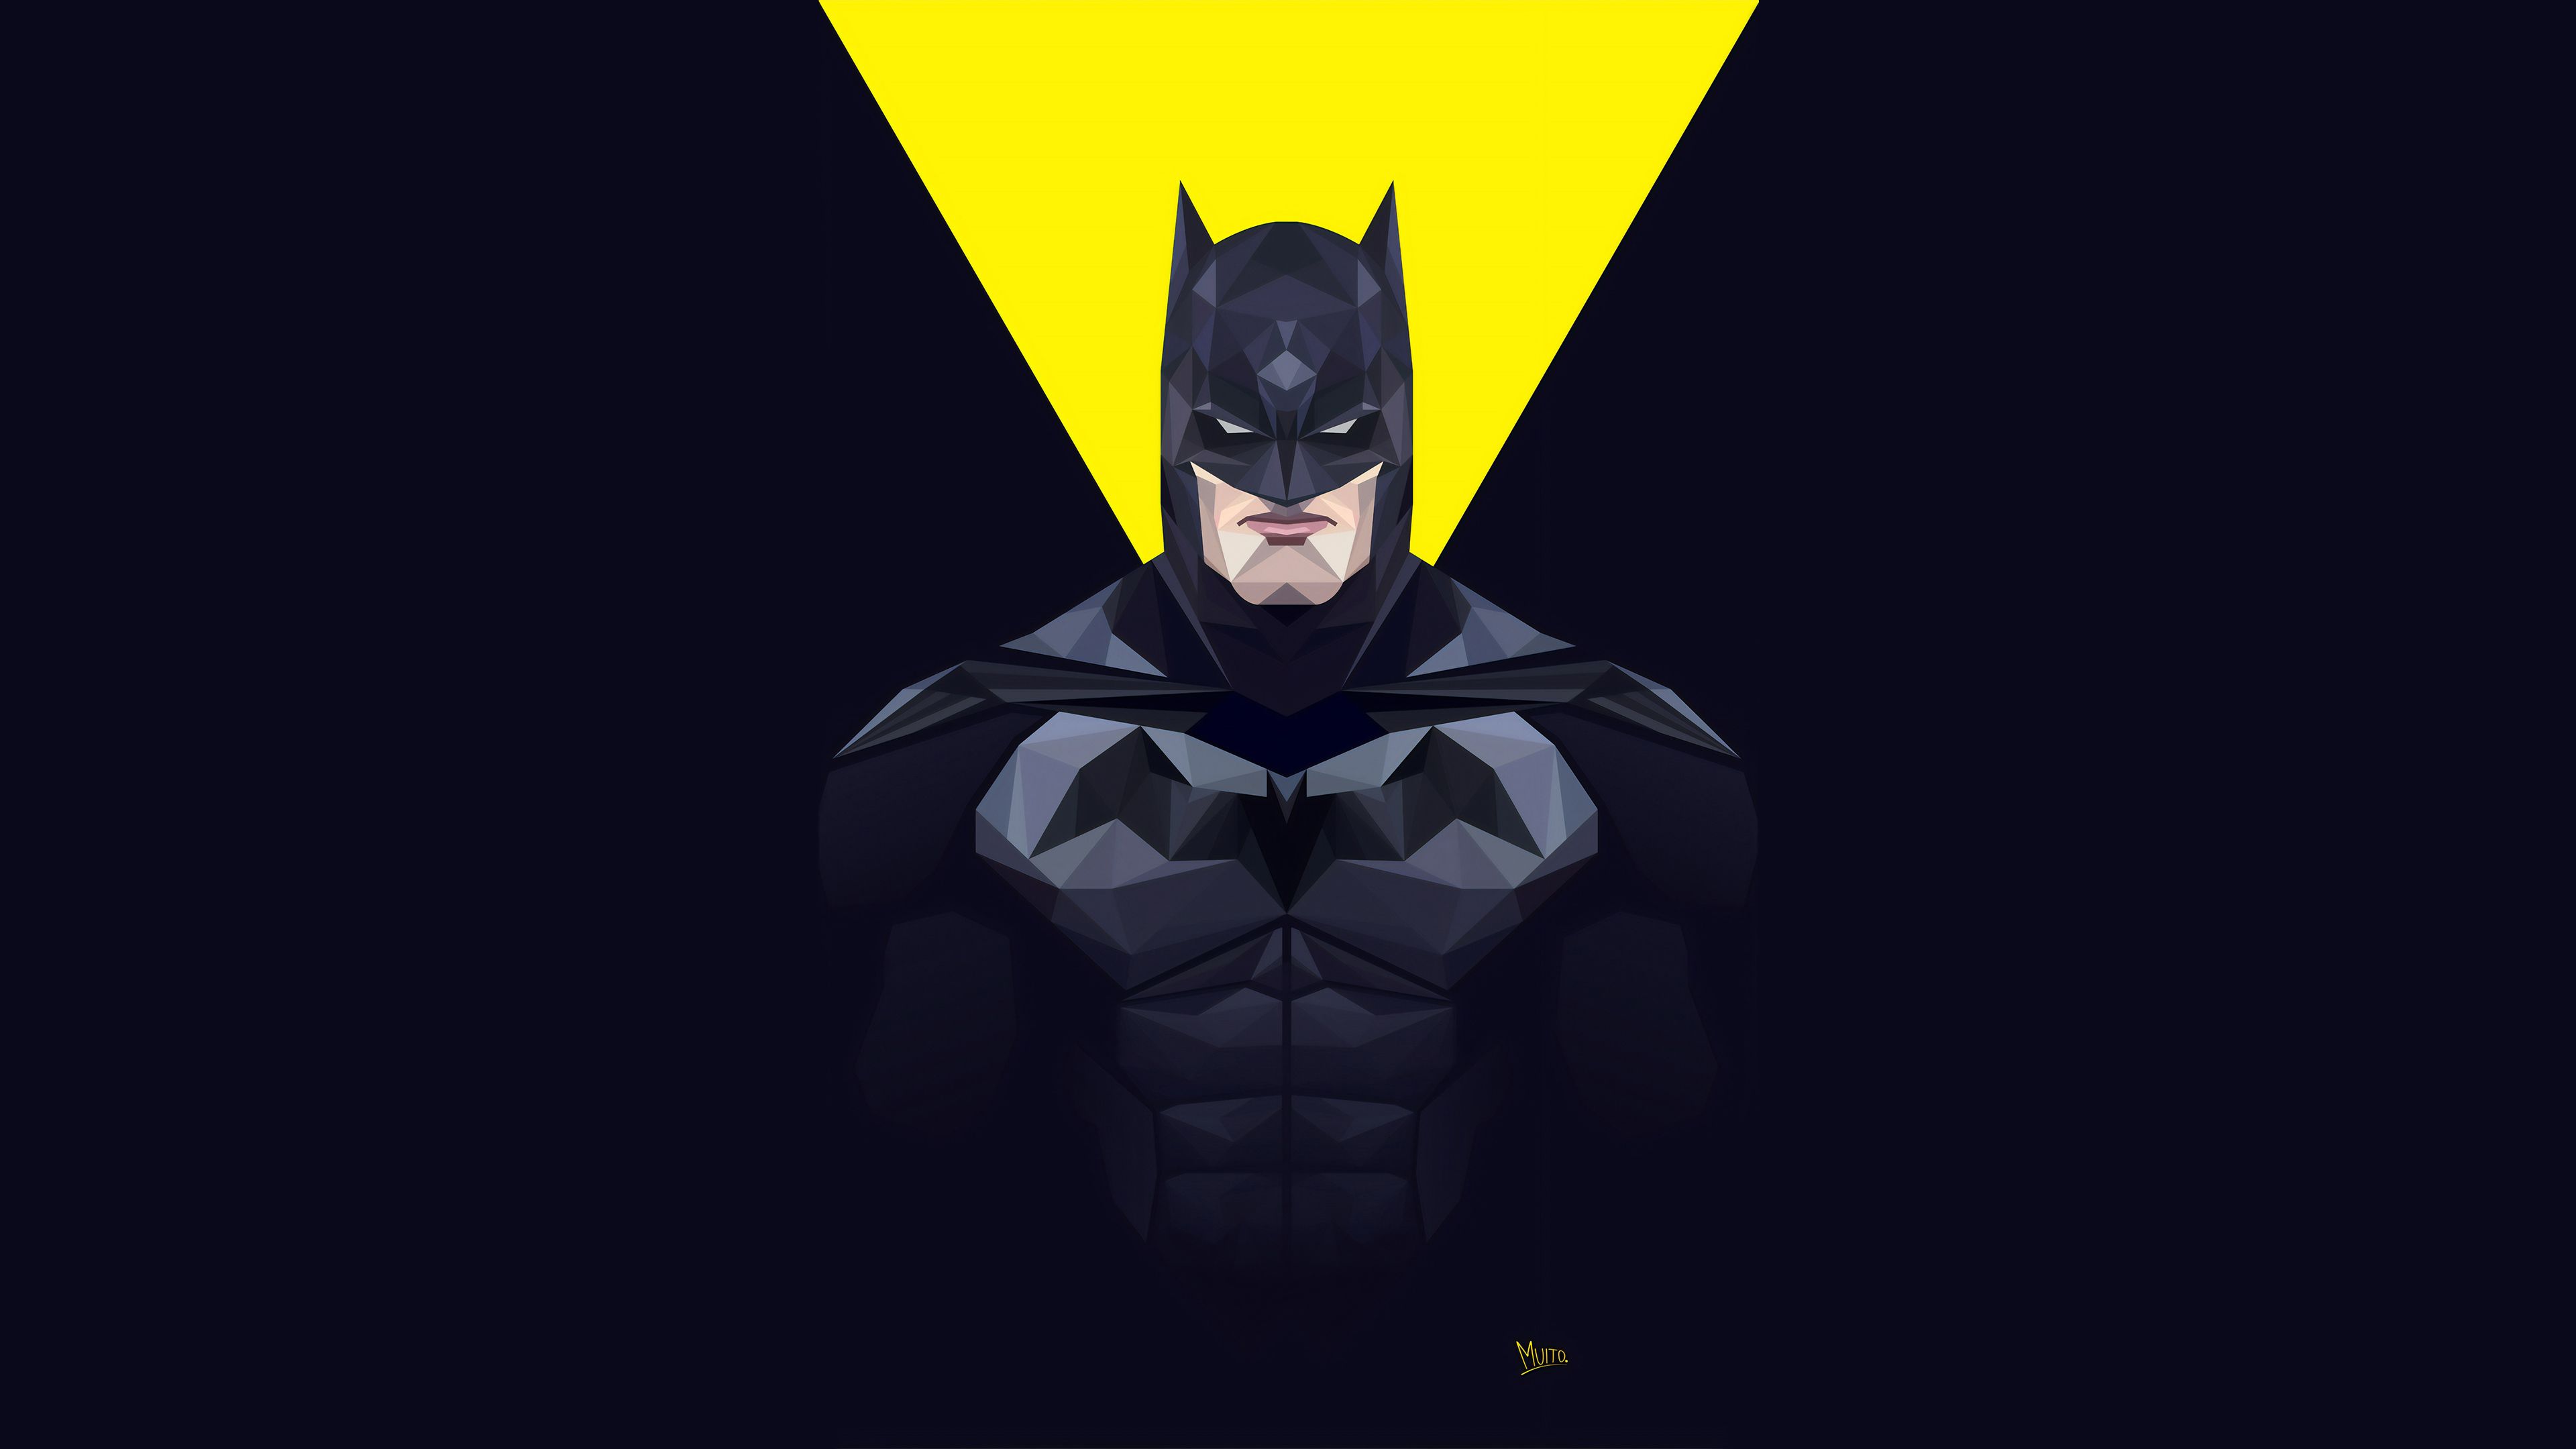 Batman Minimal 4k, HD Superheroes, 4k Wallpaper, Image, Background, Photo and Picture